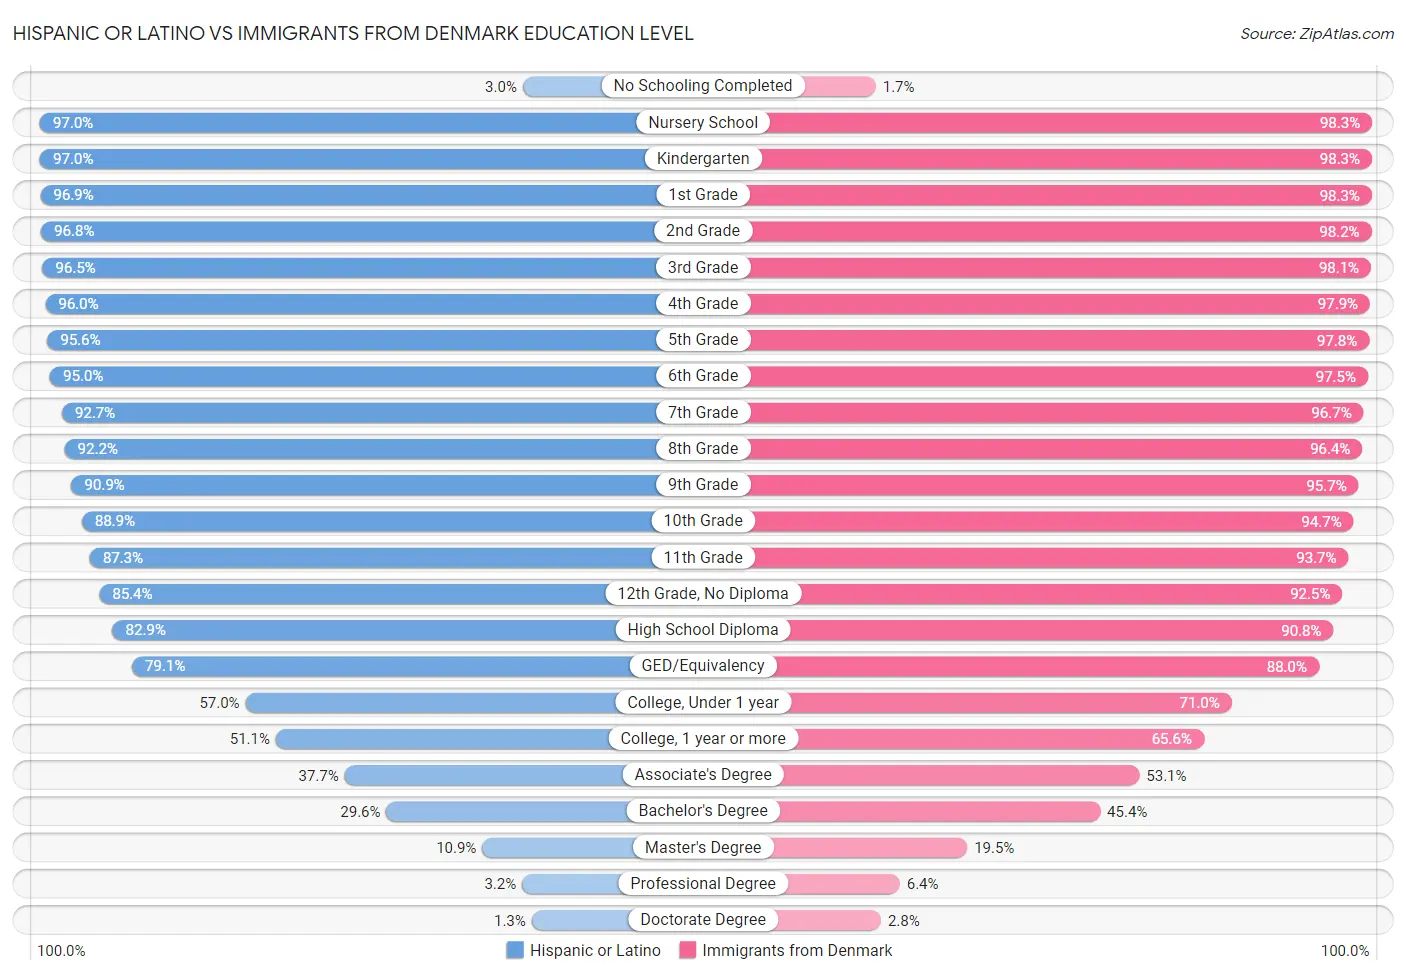 Hispanic or Latino vs Immigrants from Denmark Education Level